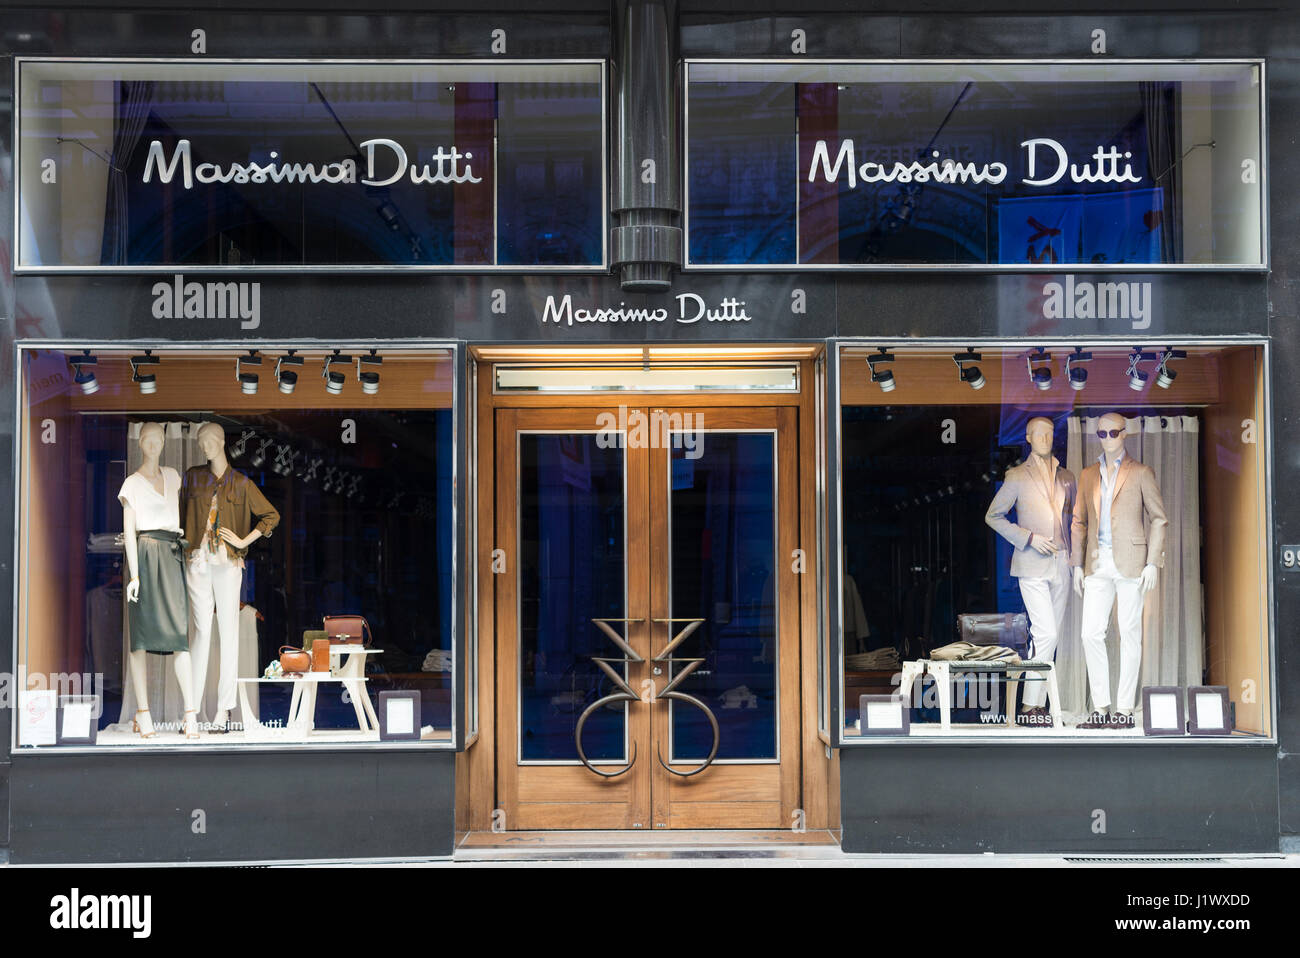 Massimo Dutti store in Antwerp Stock Photo - Alamy